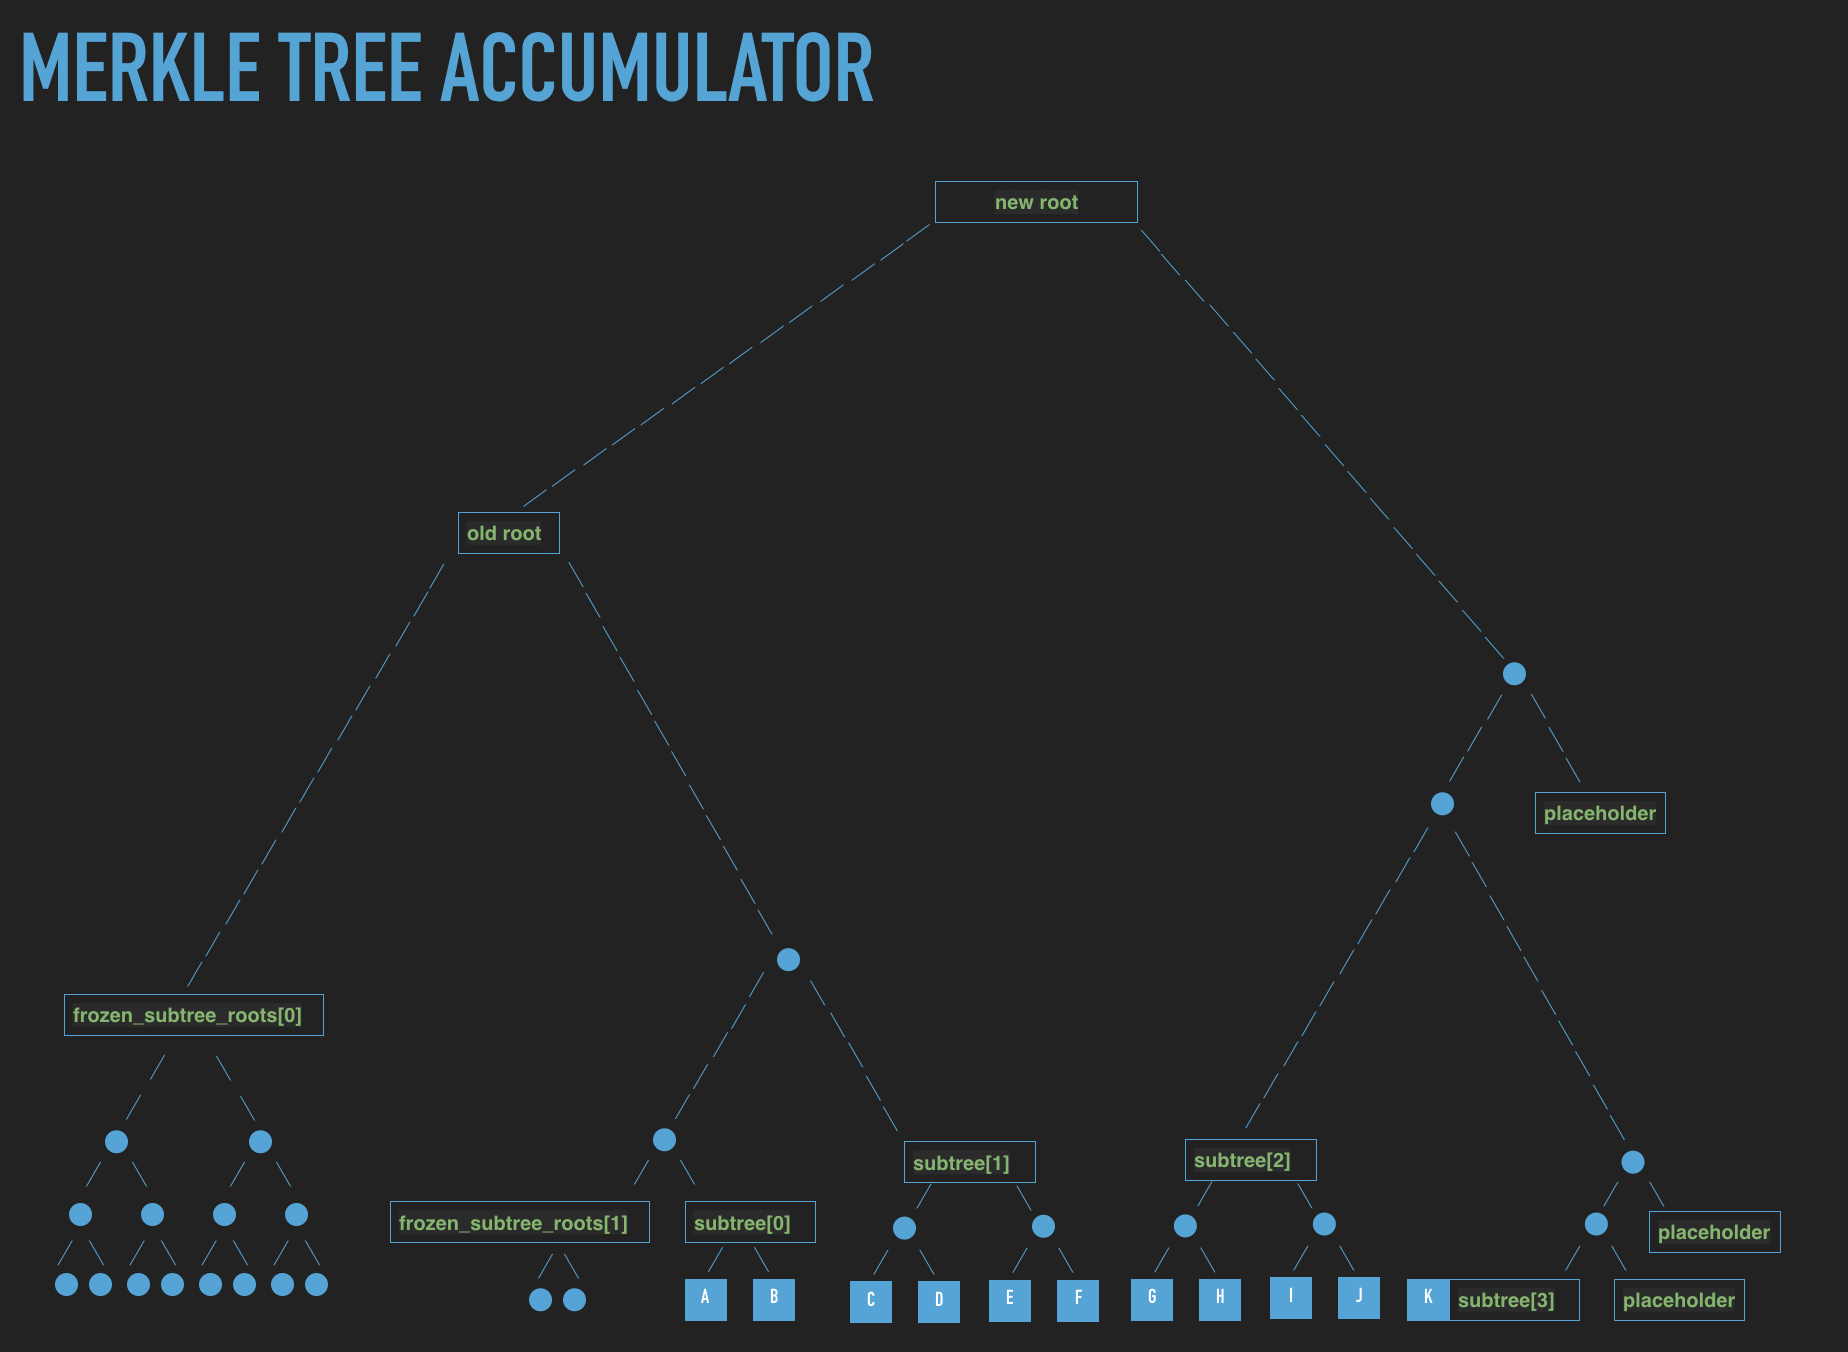 Merkle tree accumulator